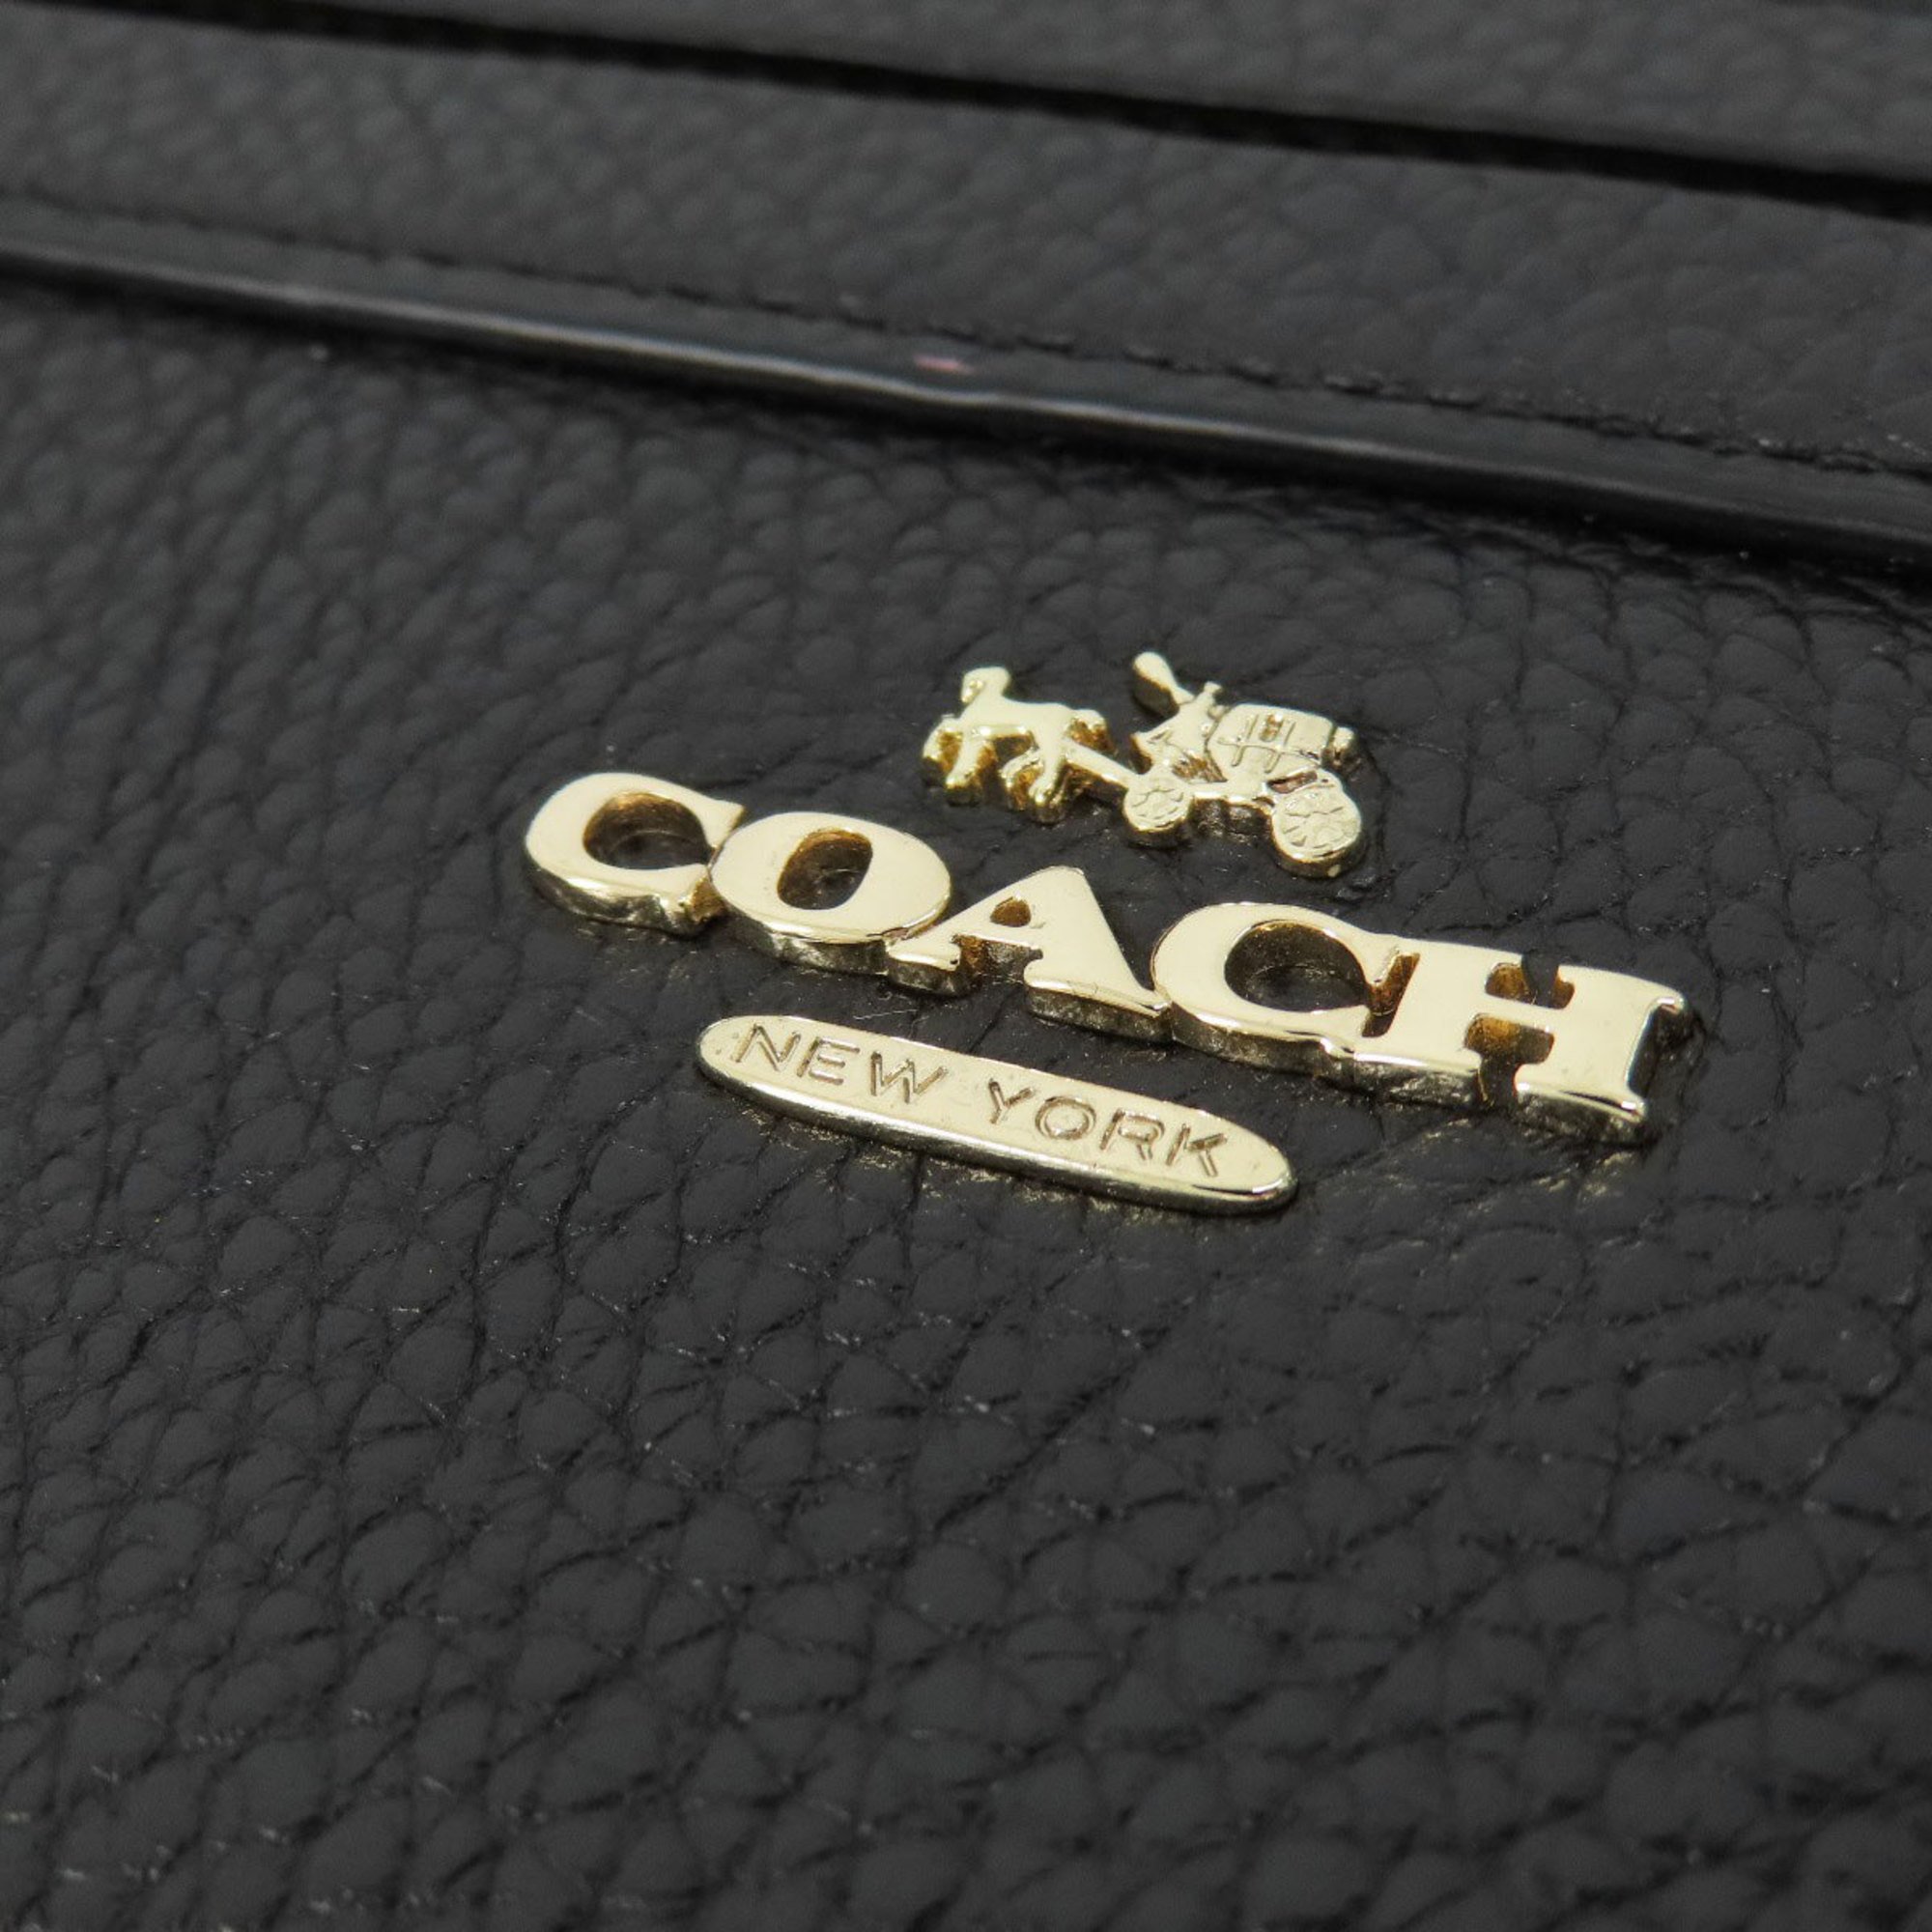 Coach F54687 Metal Tote Bag Leather Women's COACH